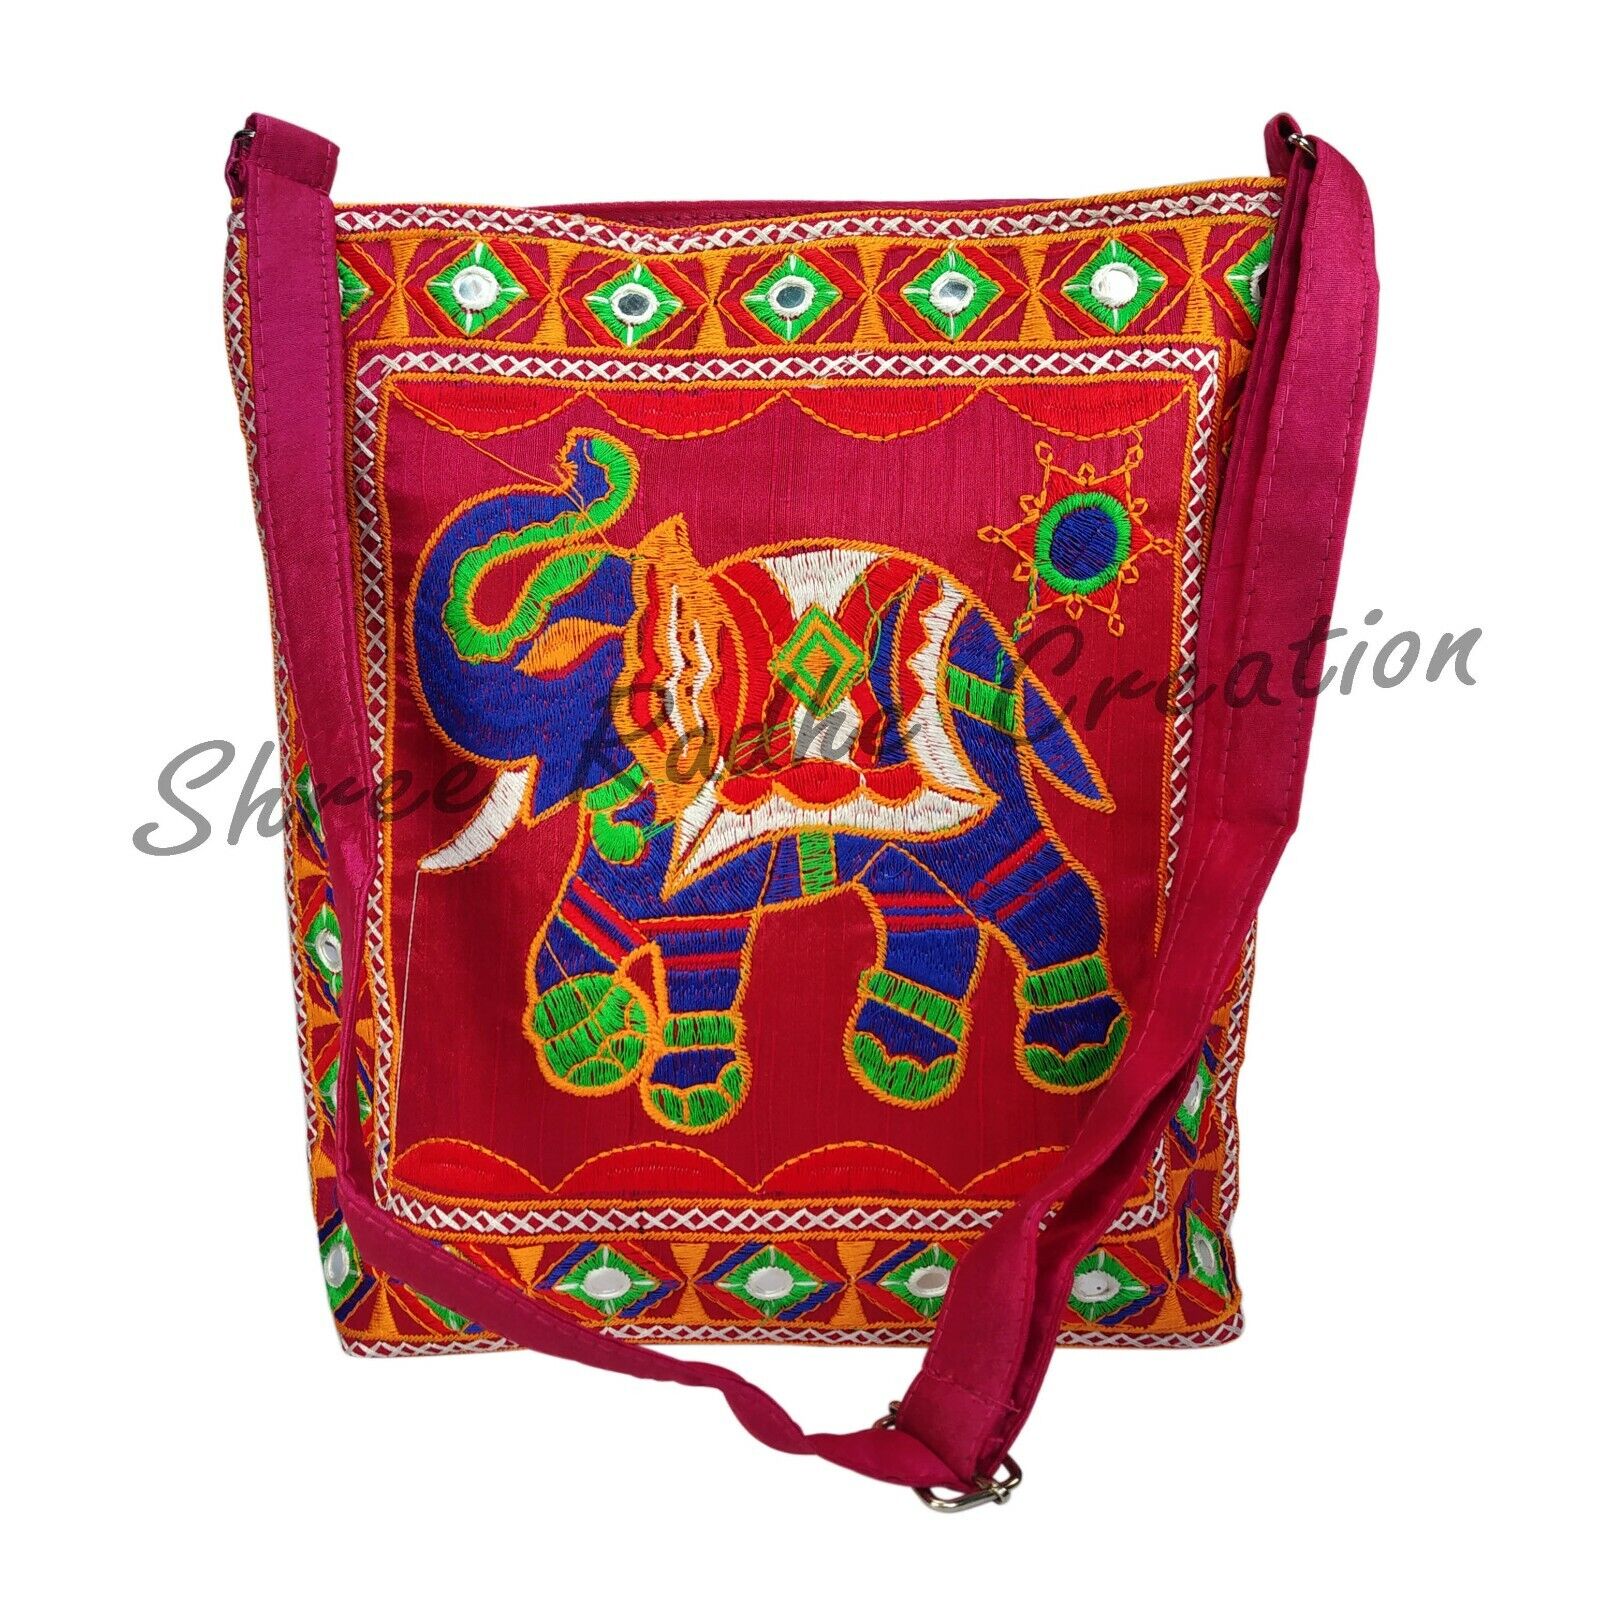 Elephant Cross body bag Tampa Mall Handmade Elegant Wit Embroidered Antique Popular overseas